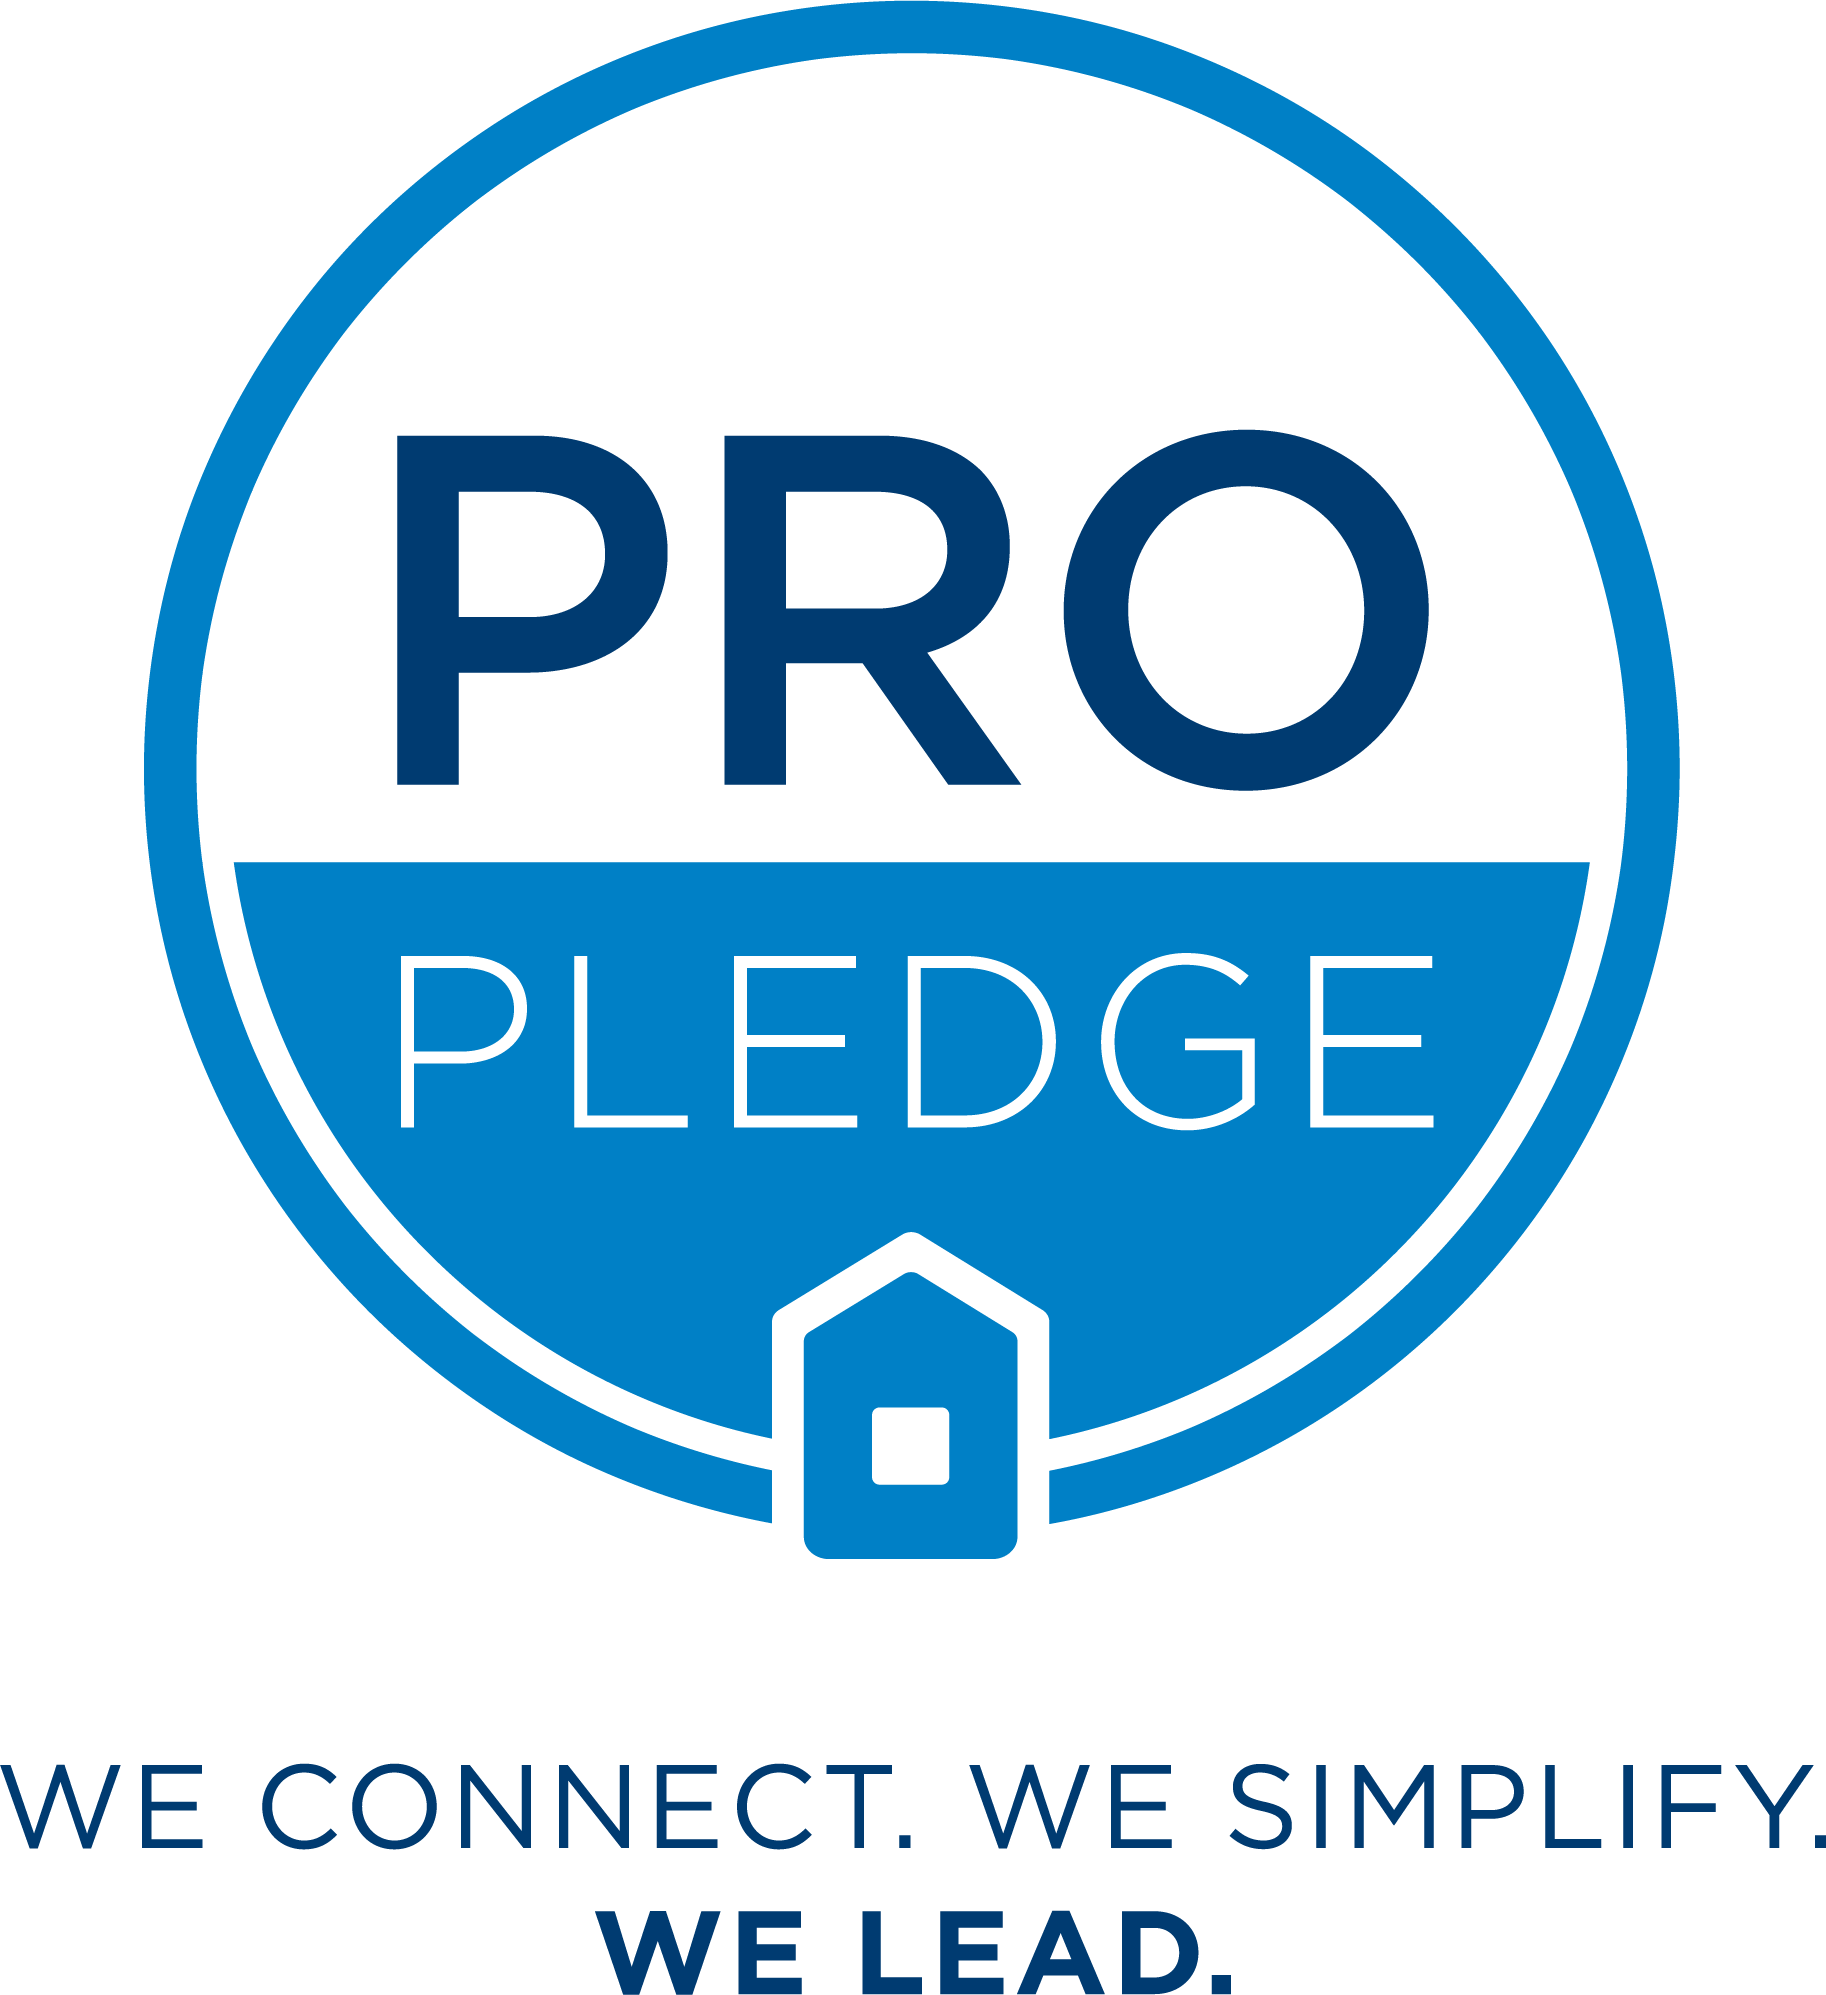 Pro Pledge Logo - We Connect. We Simplify. We Lead.